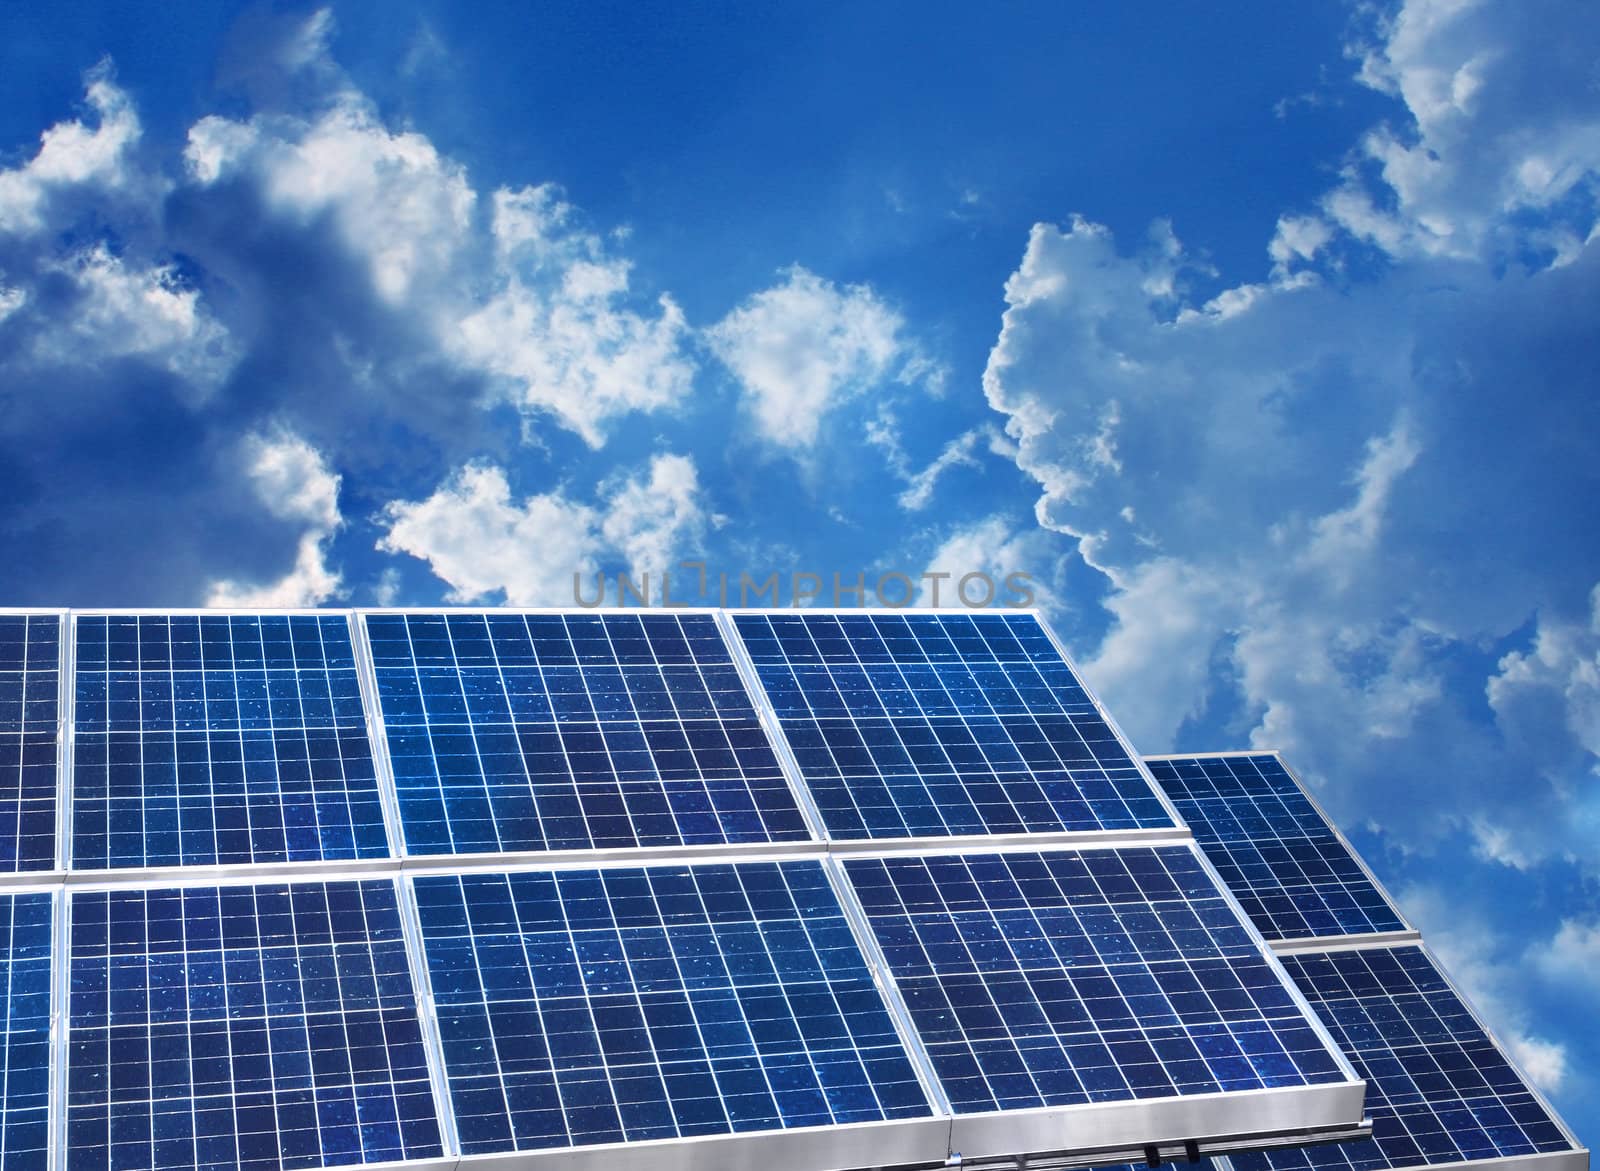 Solar panels blue sky by anterovium